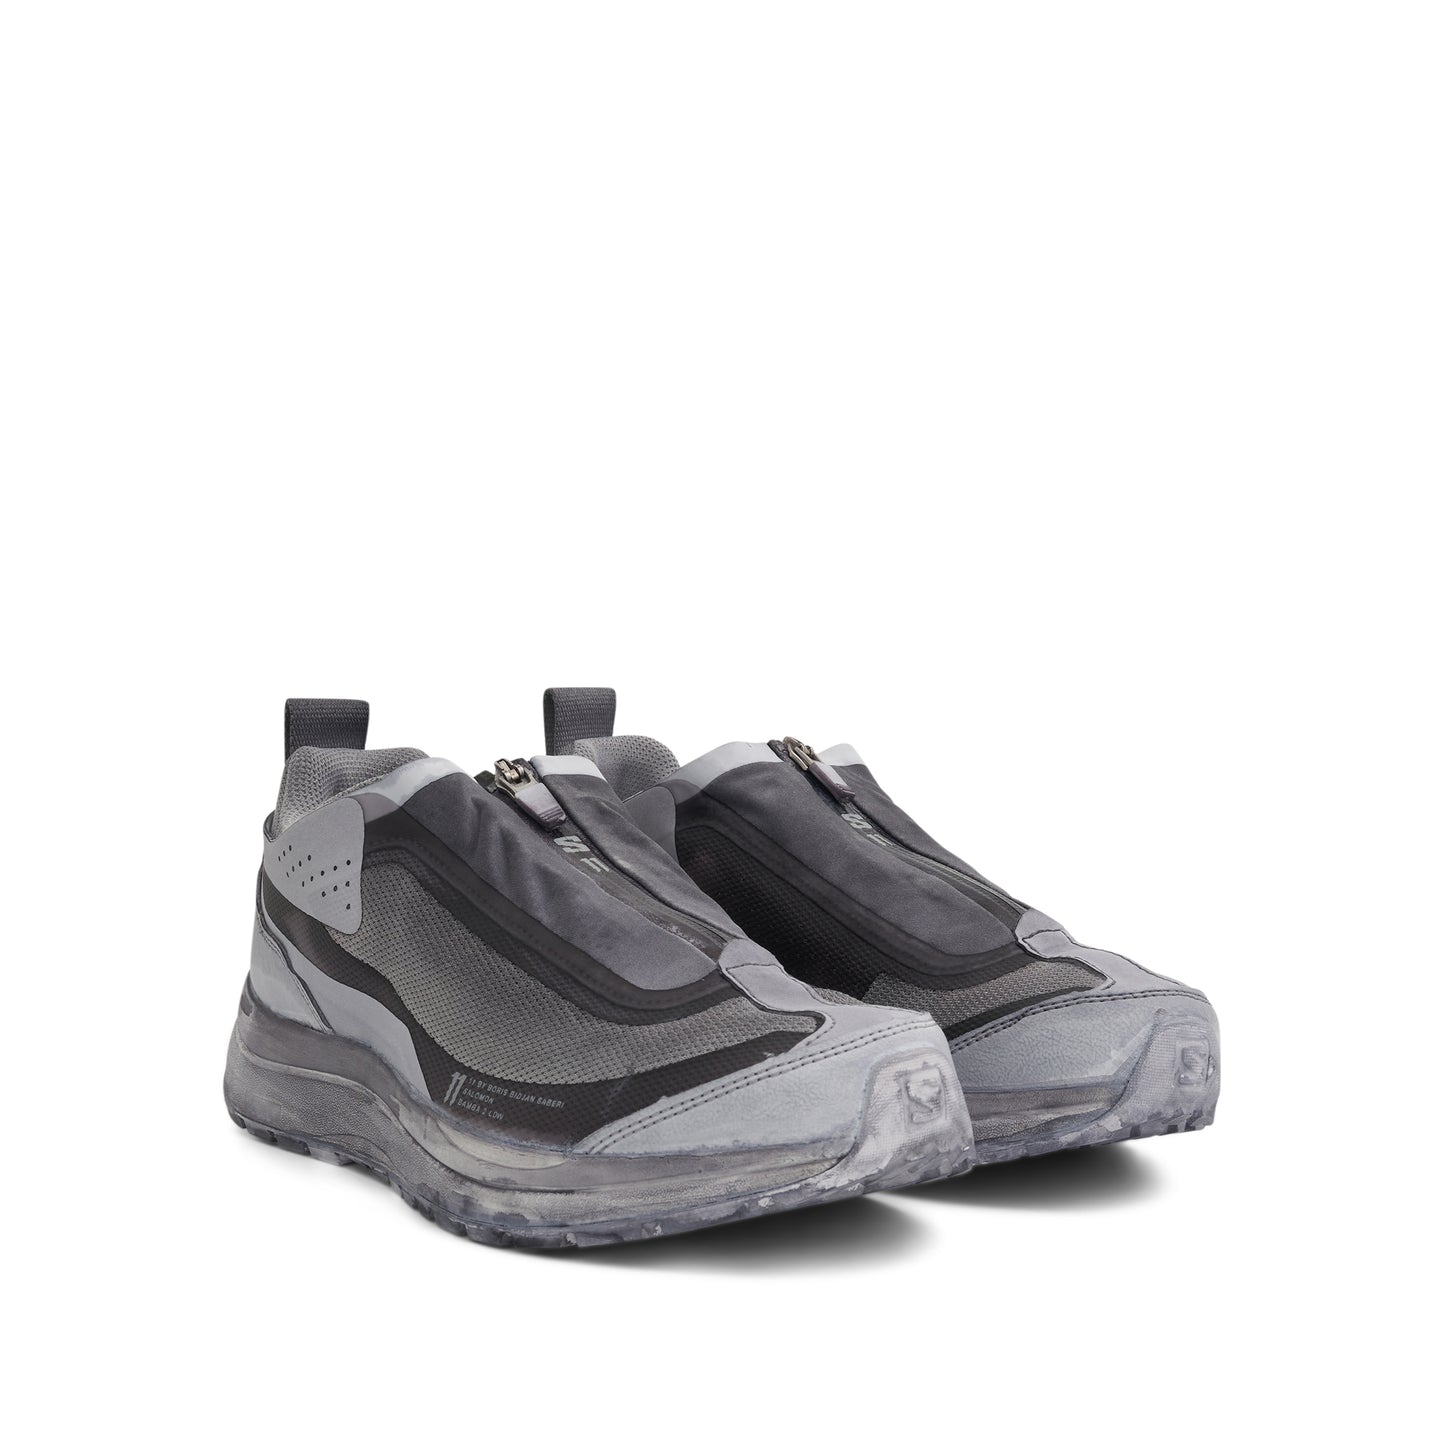 11 BY BBS x Salomon Bamba 2 Sneaker in Light Grey